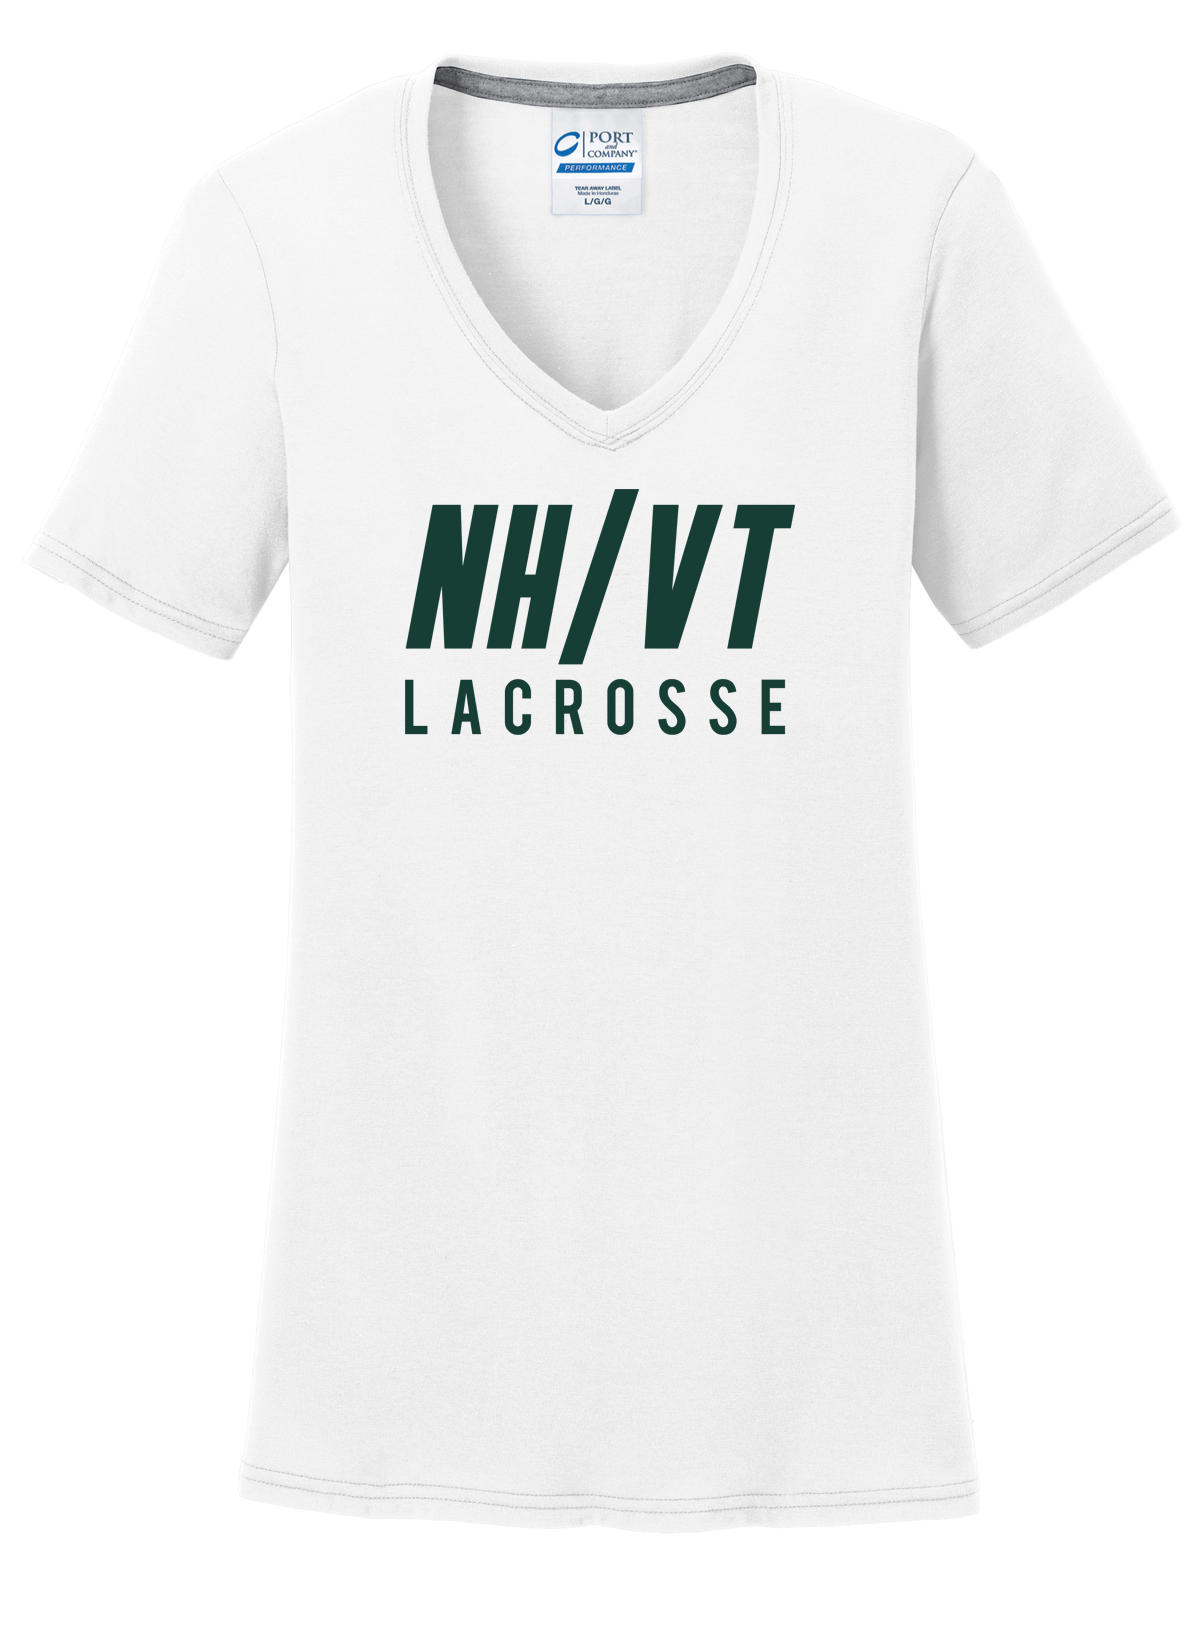 NH/VT Lacrosse  Women's T-Shirt